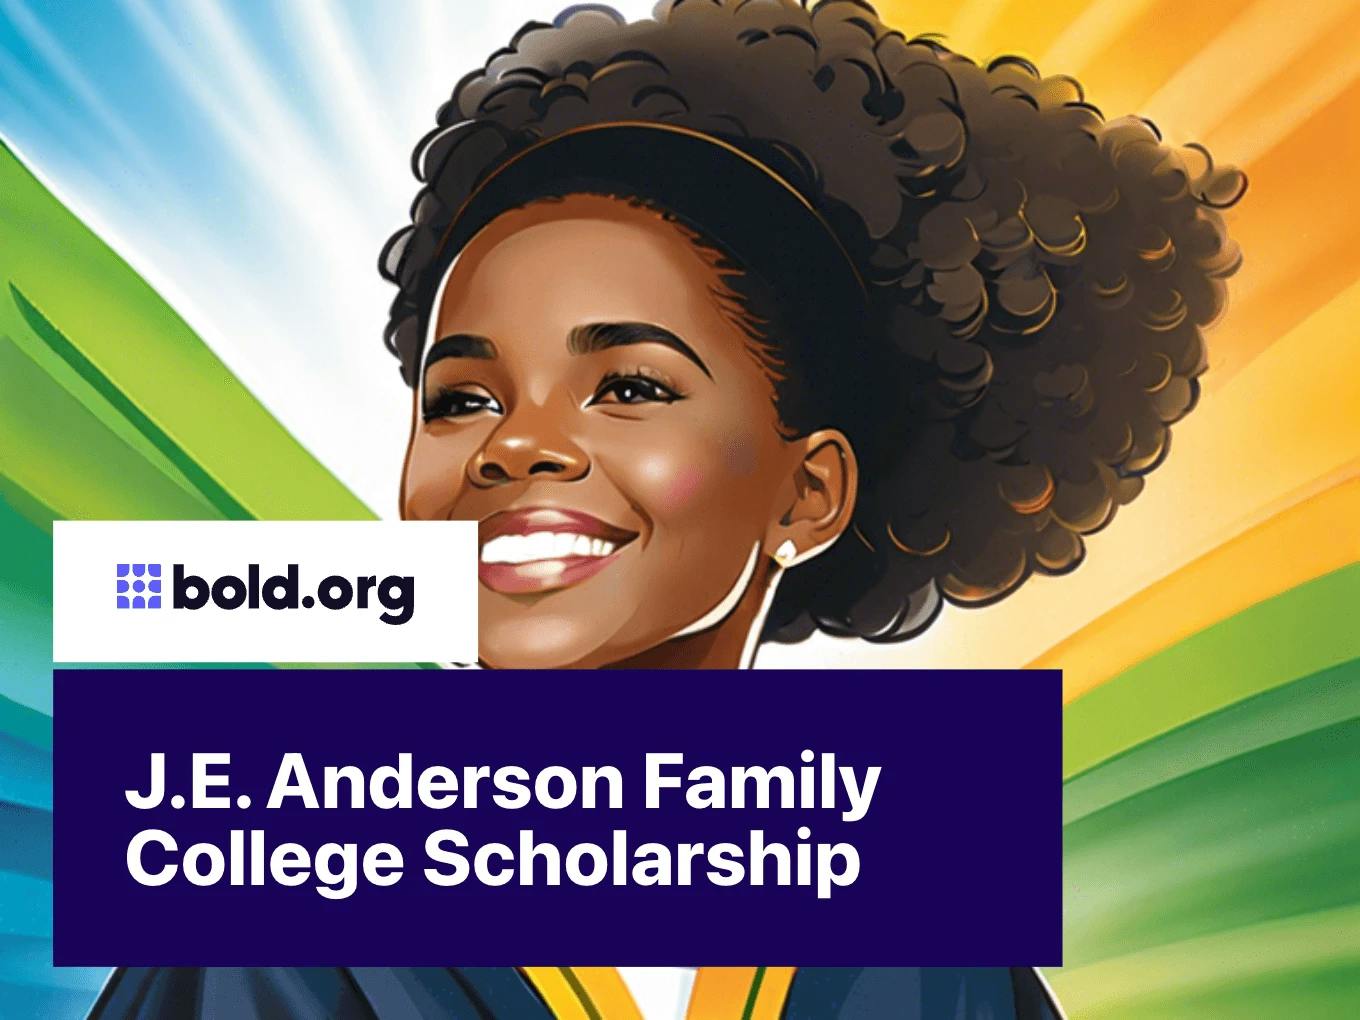 J.E. Anderson Family College Scholarship